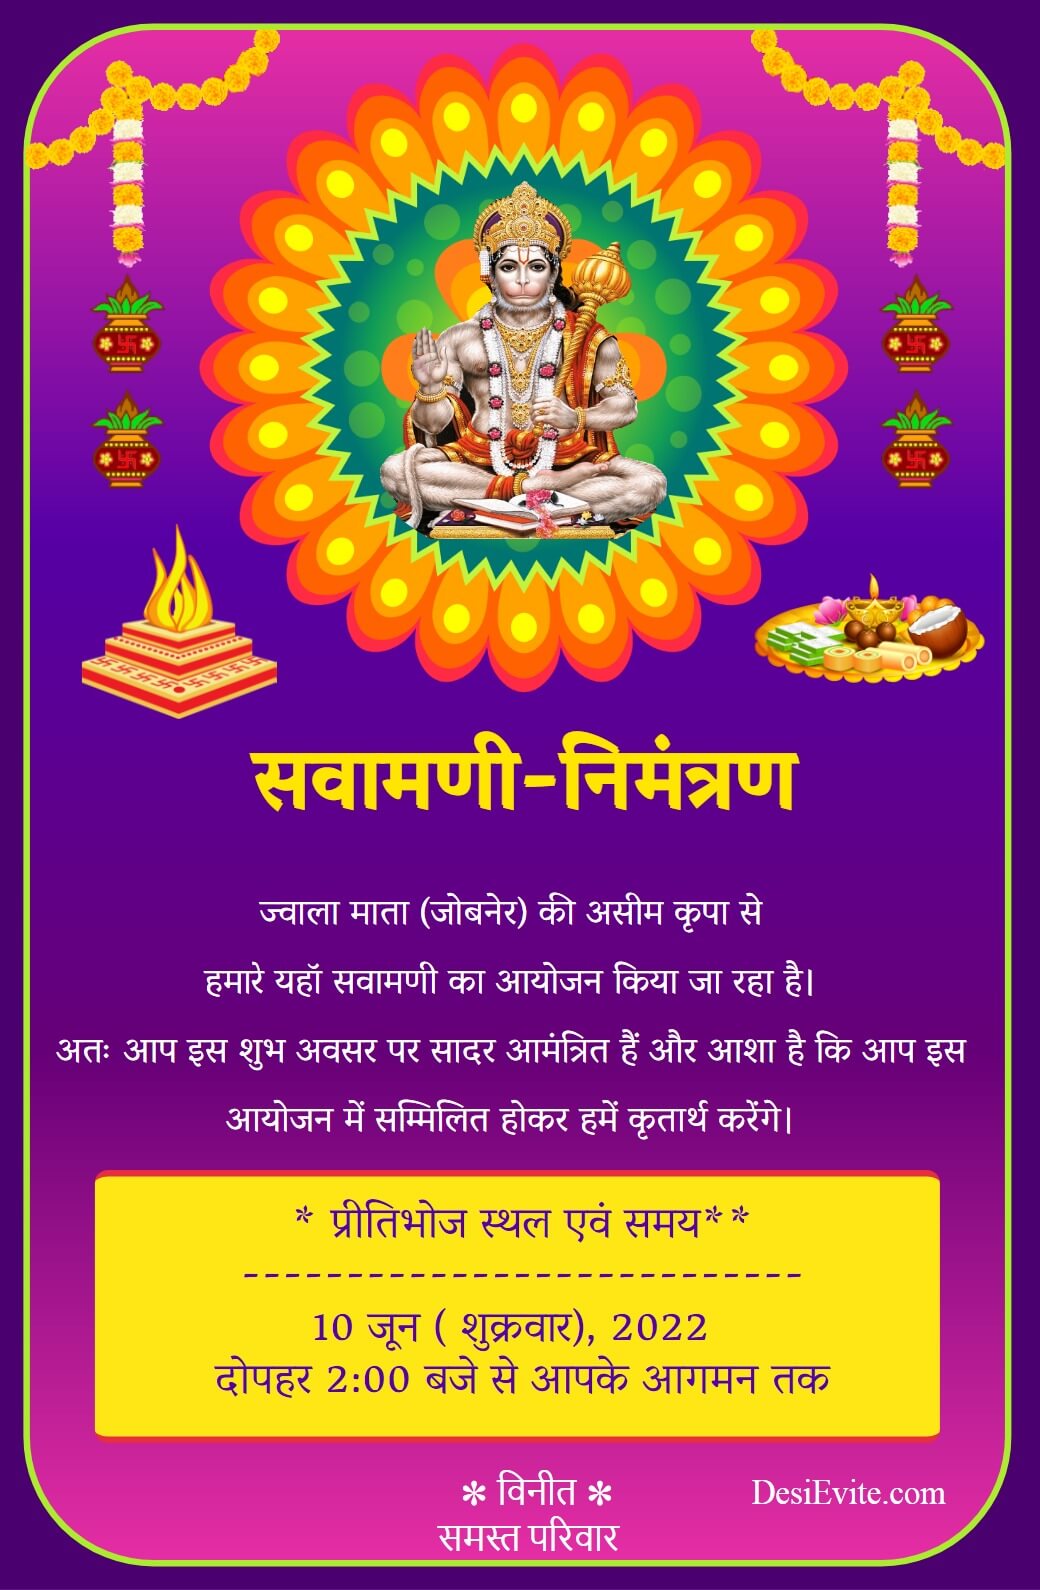 sawamani invitation card hindi 55 